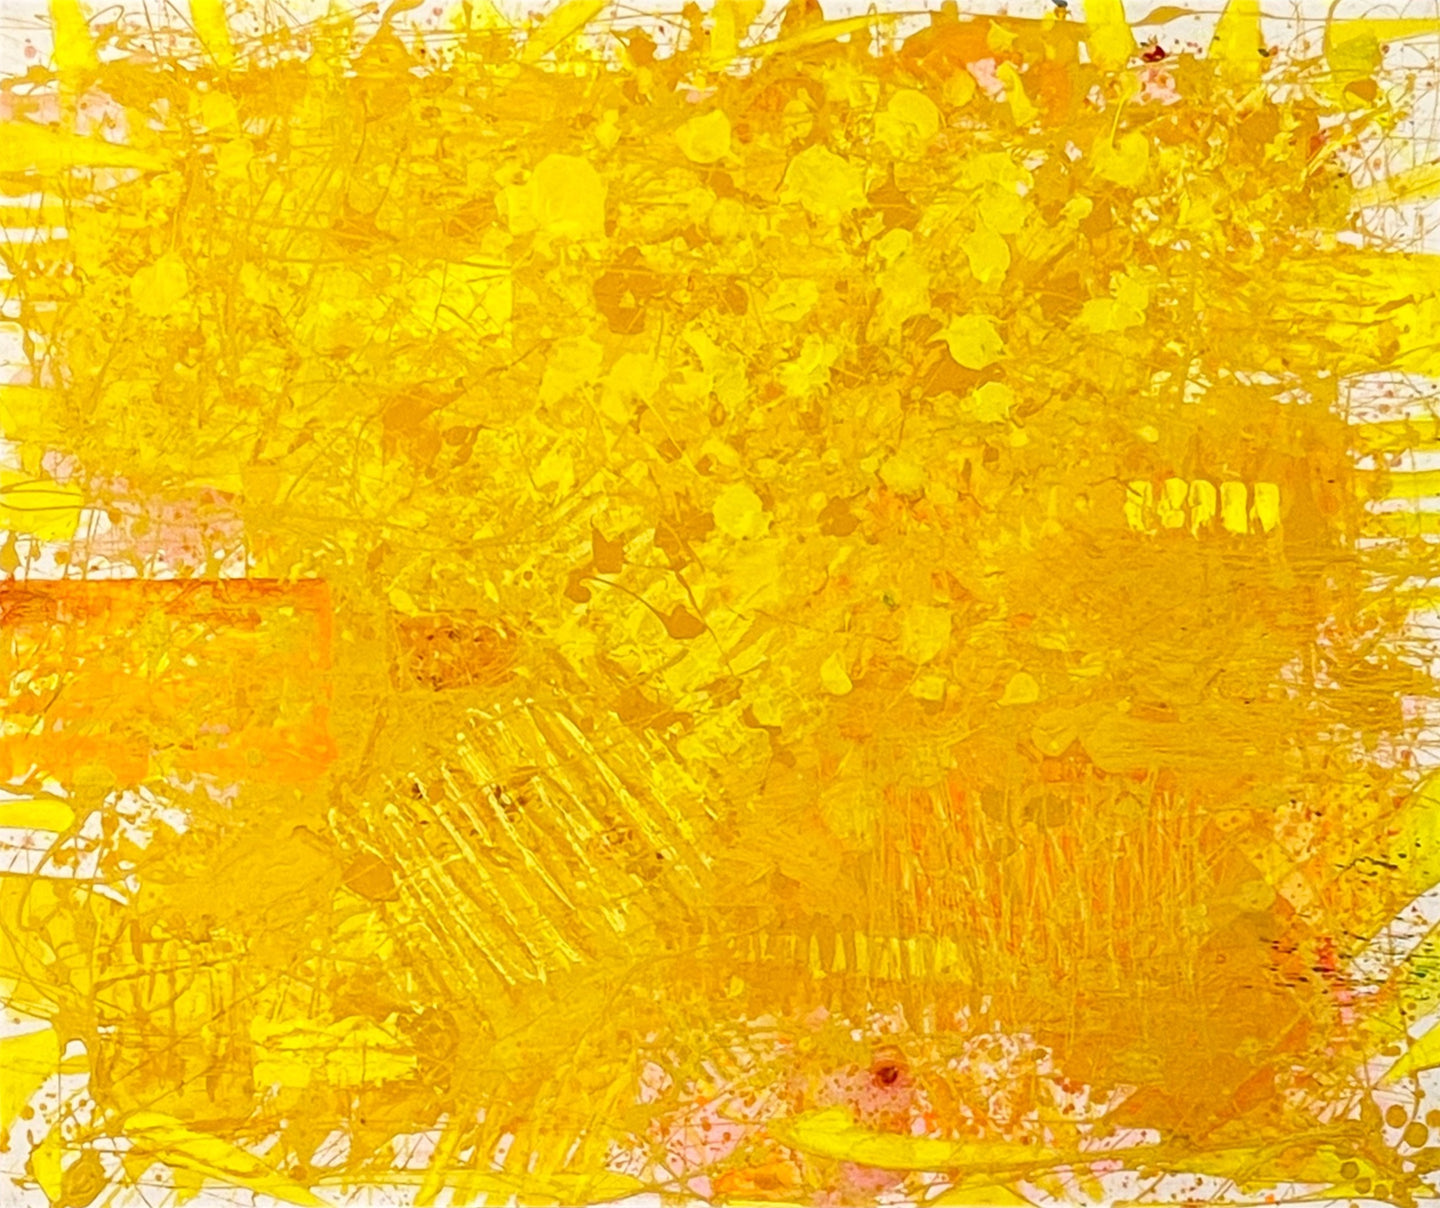 J. Steven Manolis, Sunshine, 2021, Acrylic on canvas, 60 x 72 inches, yellow abstract art